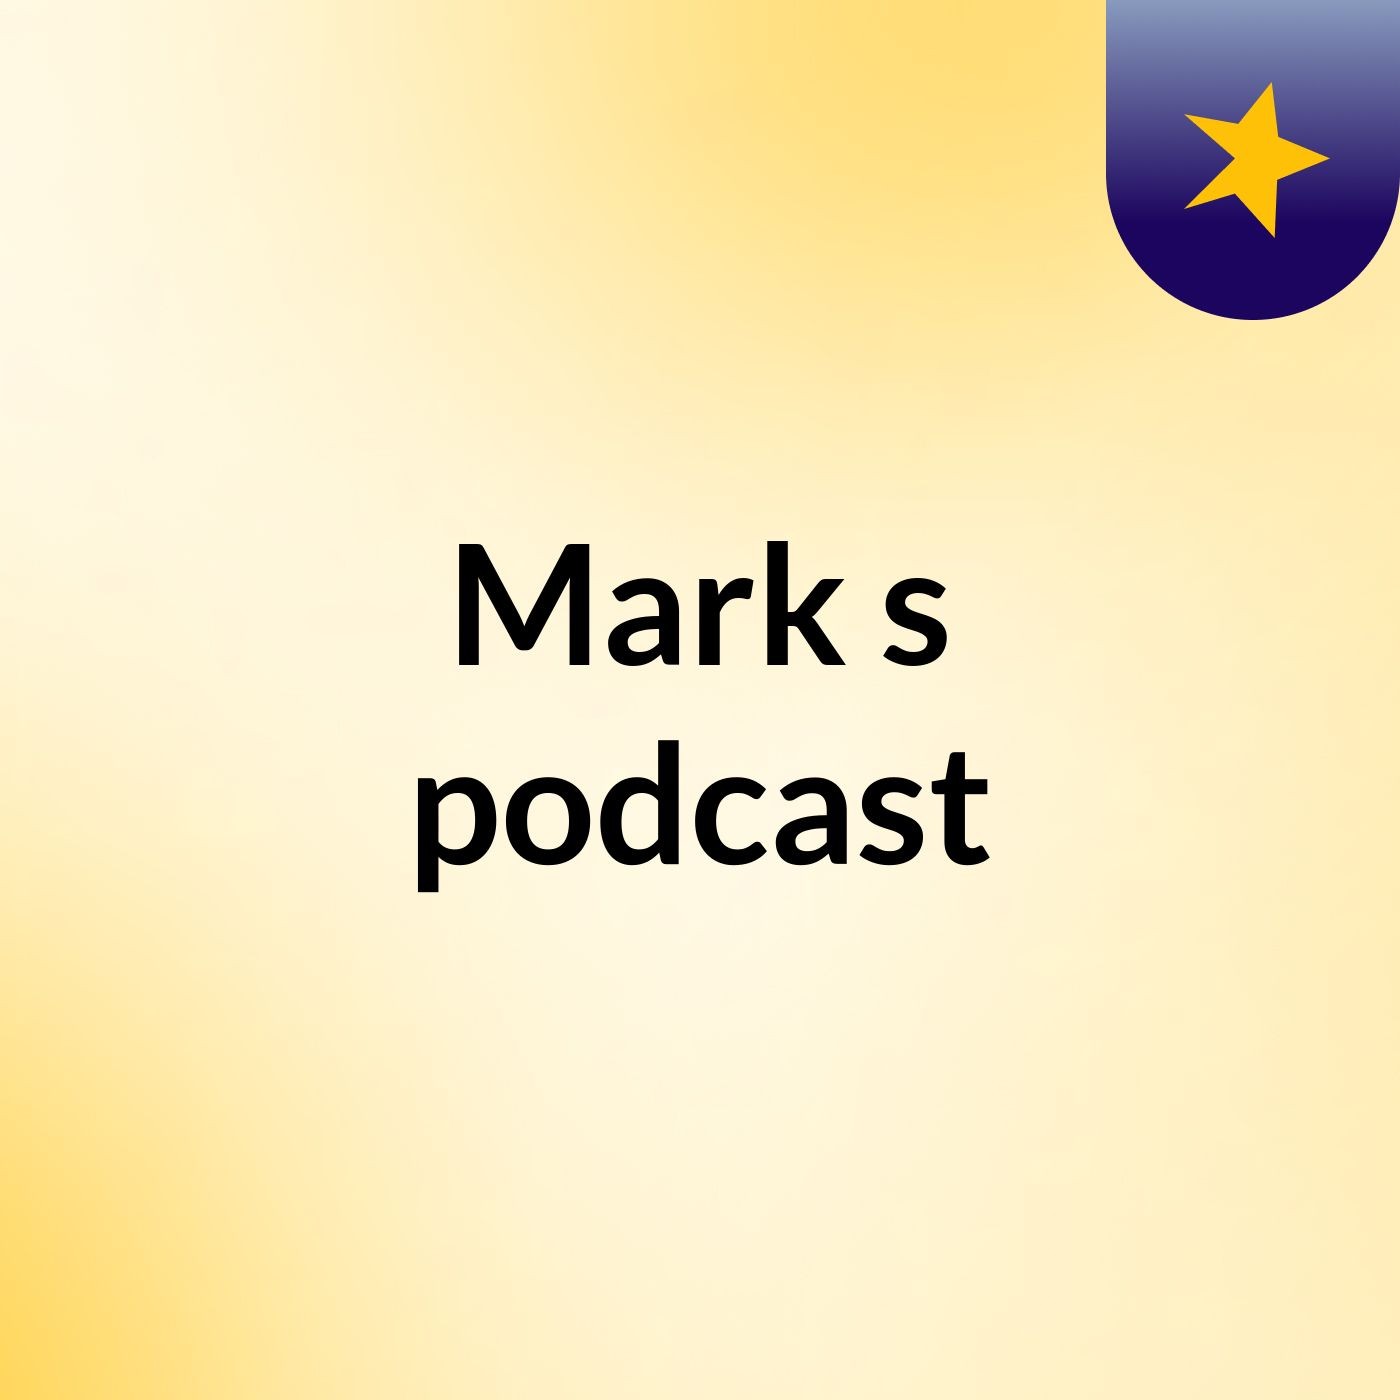 Episode 4 - Mark's podcast